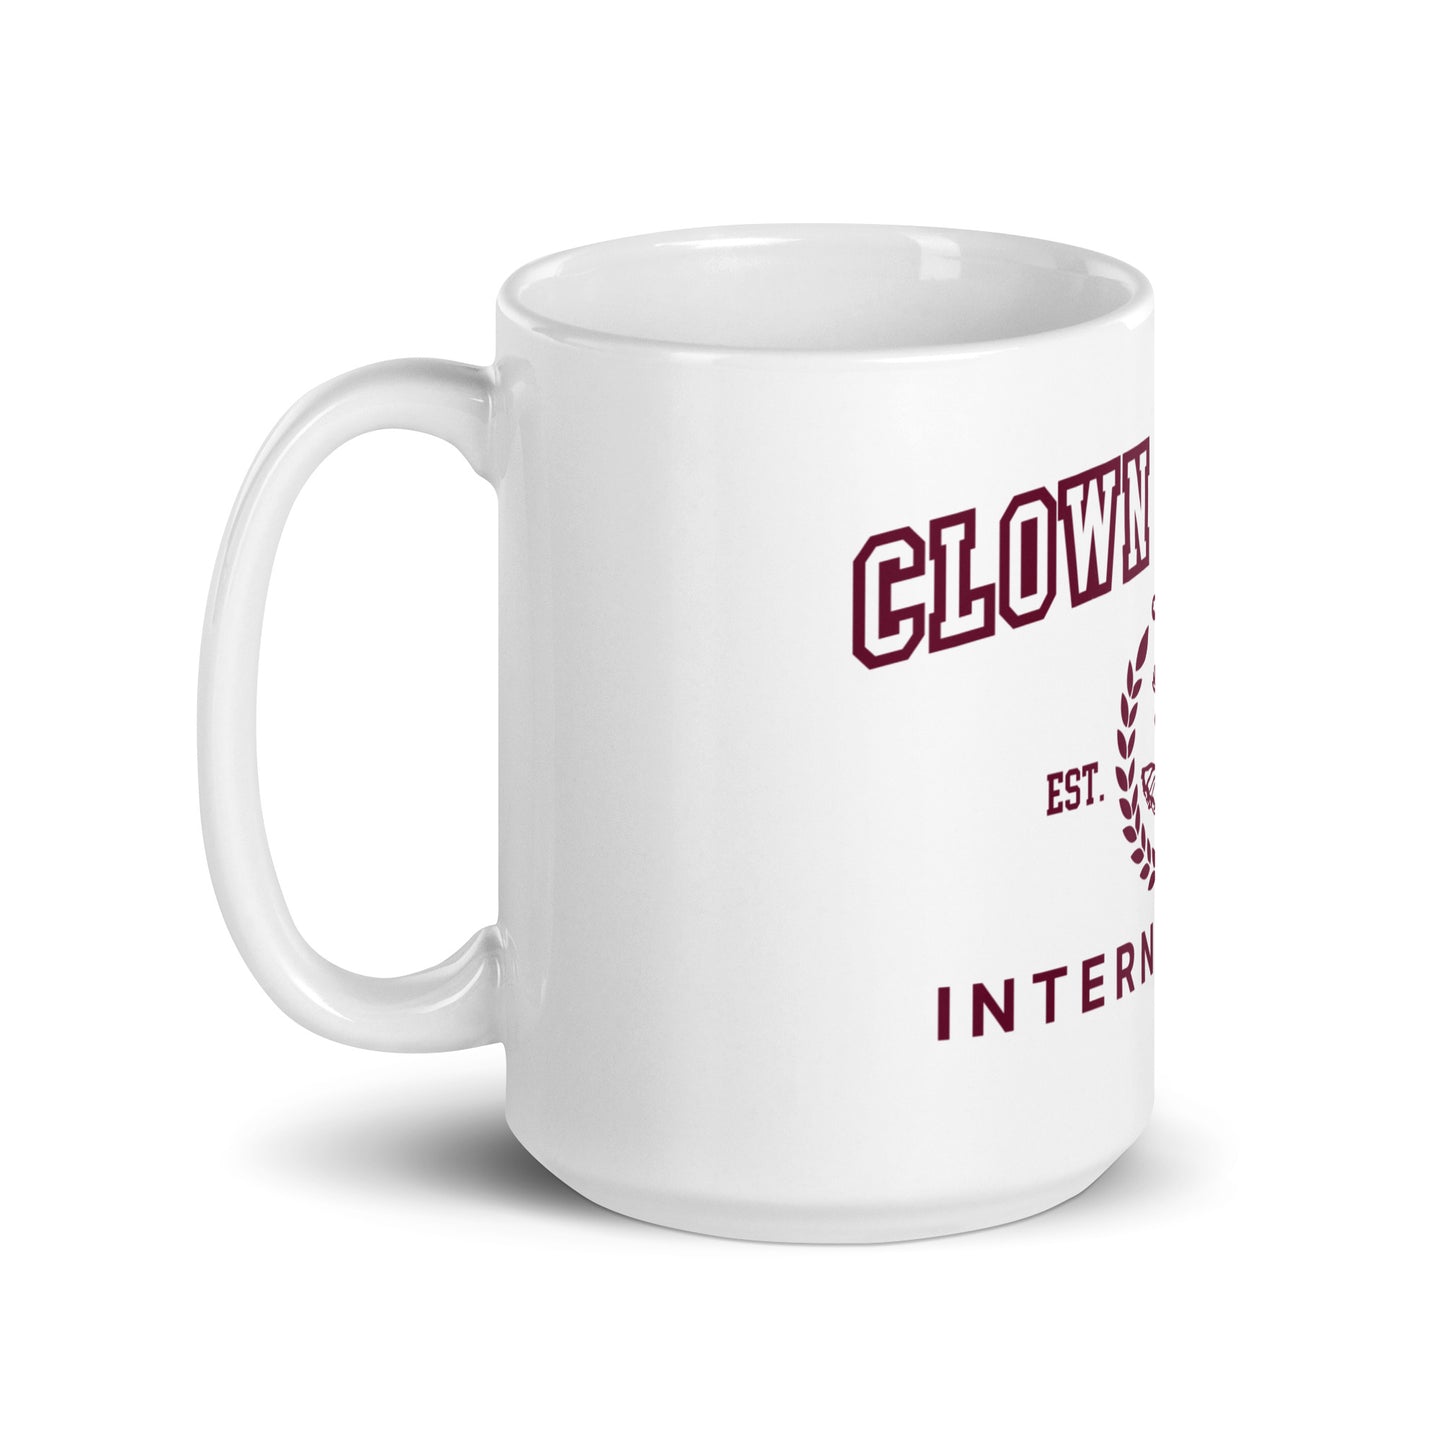 Clown College International mug